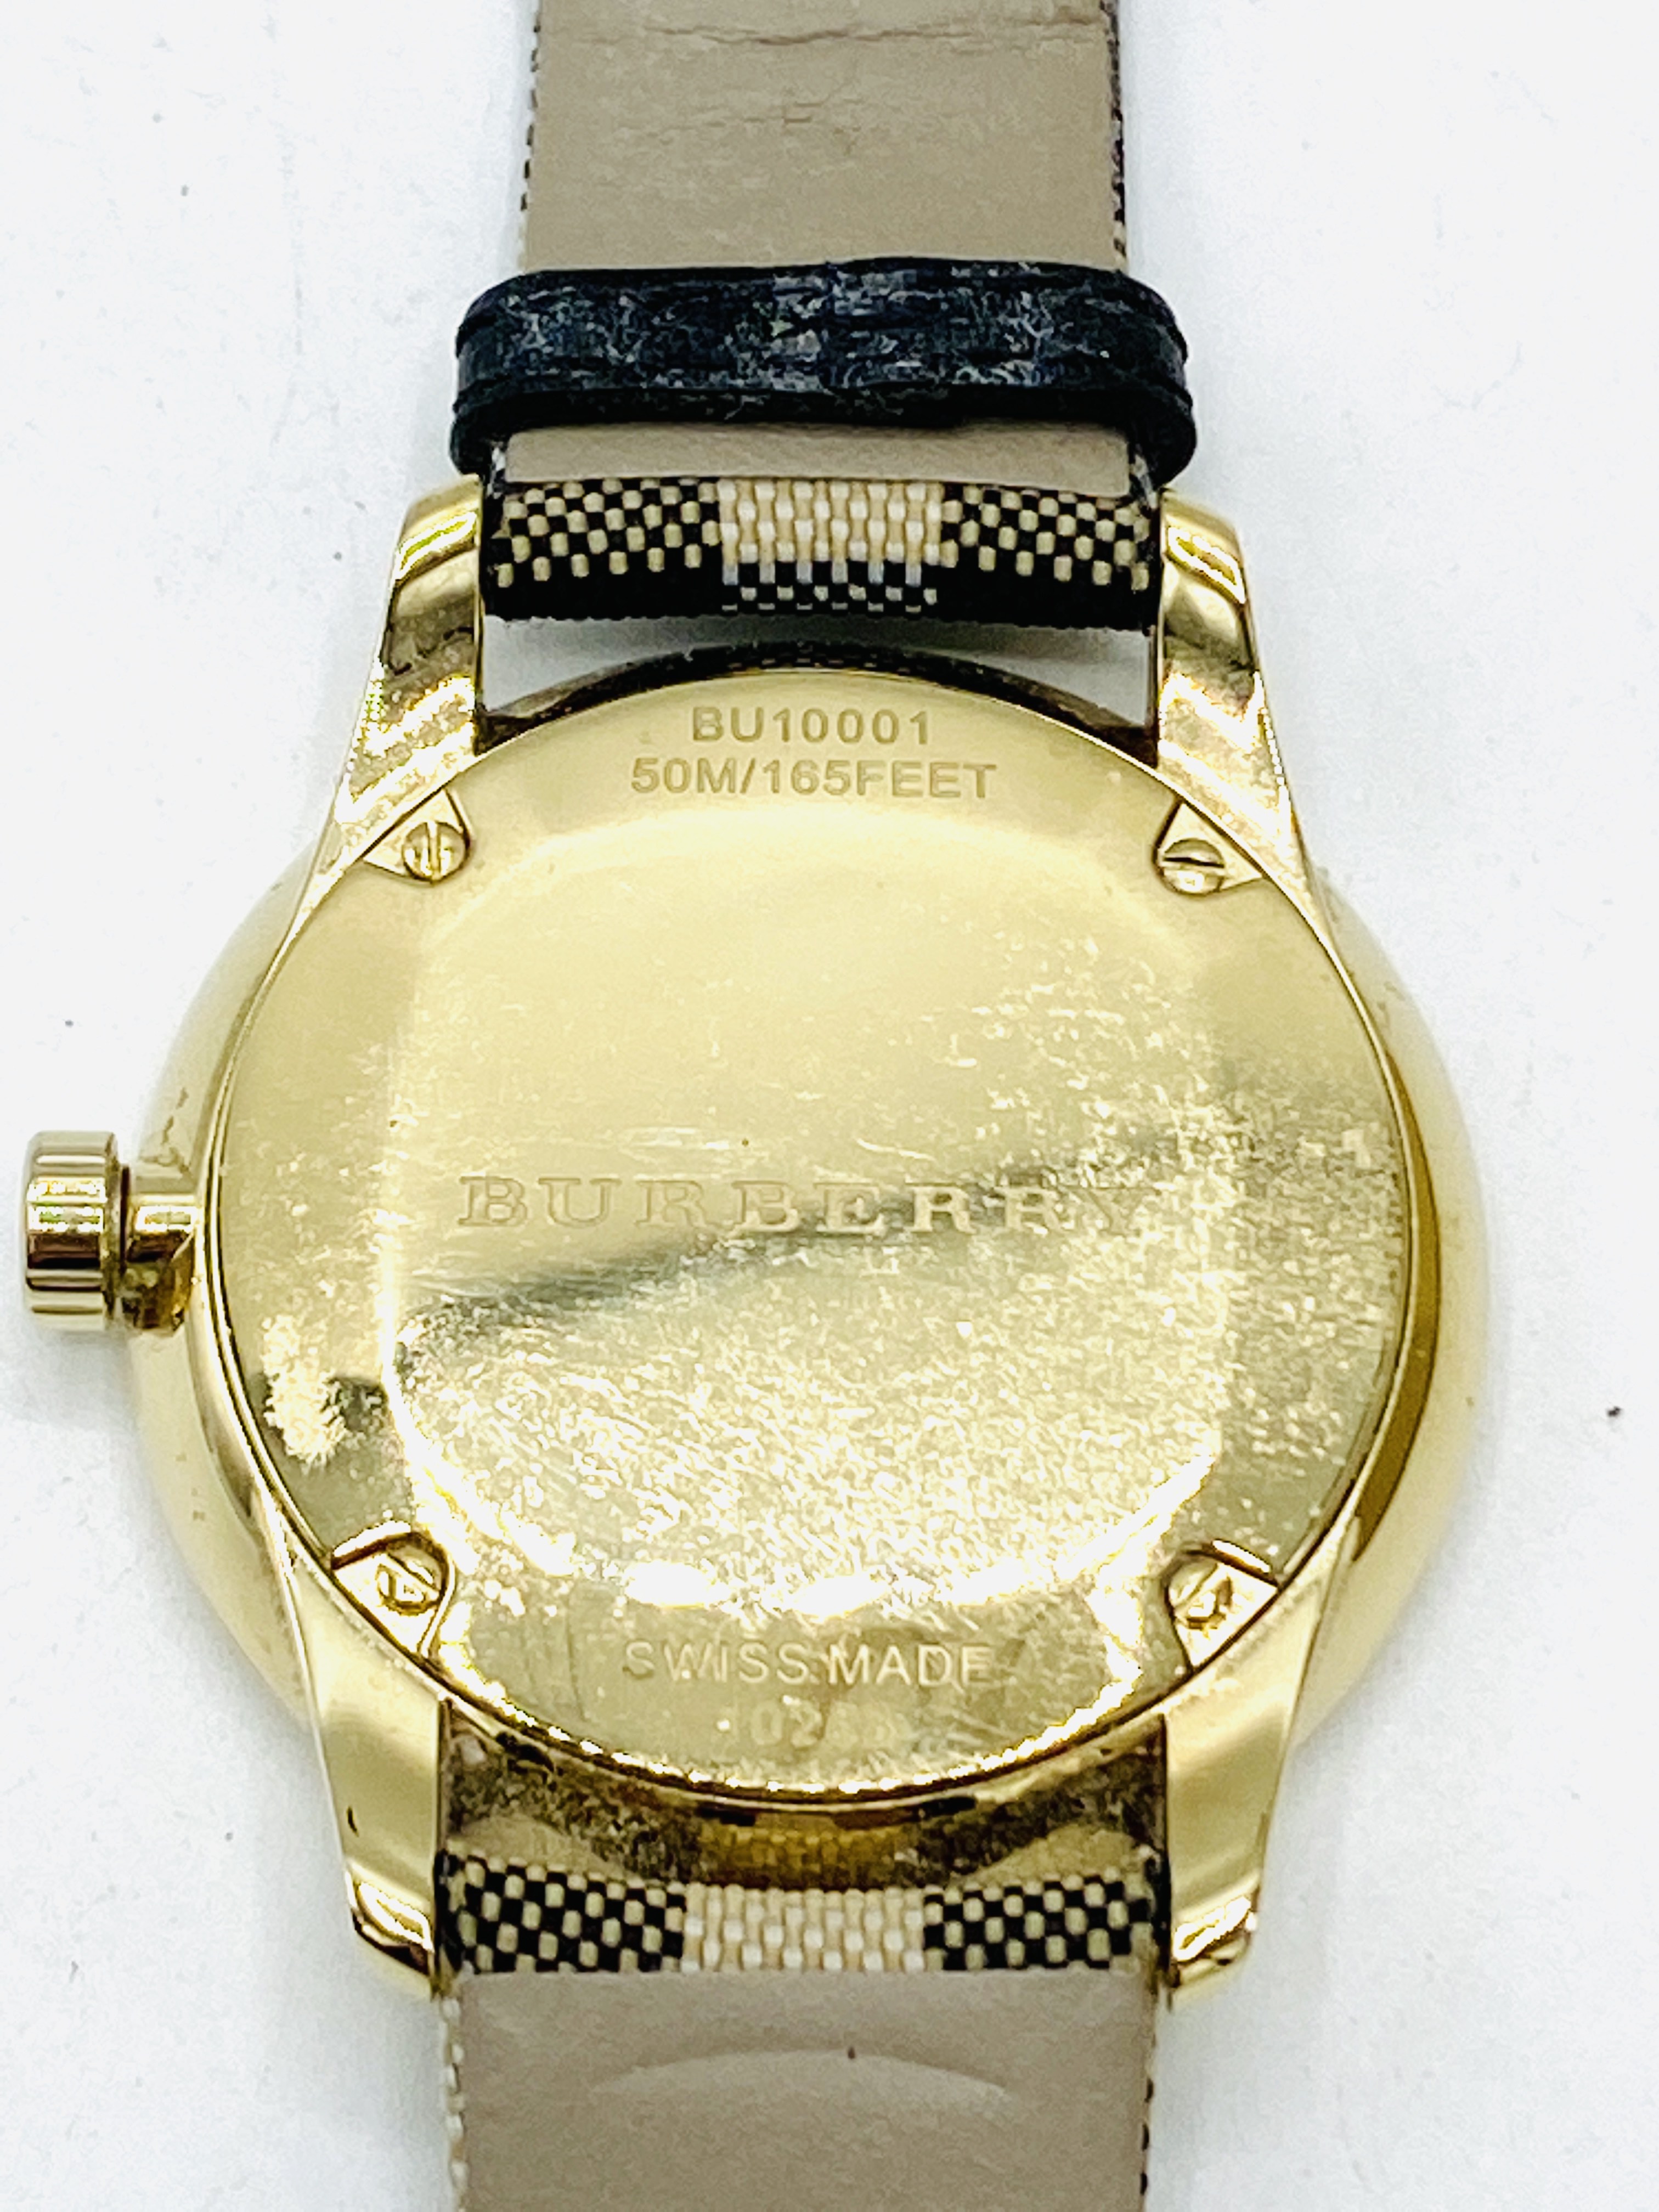 Burberry wrist watch in original box - Image 3 of 6